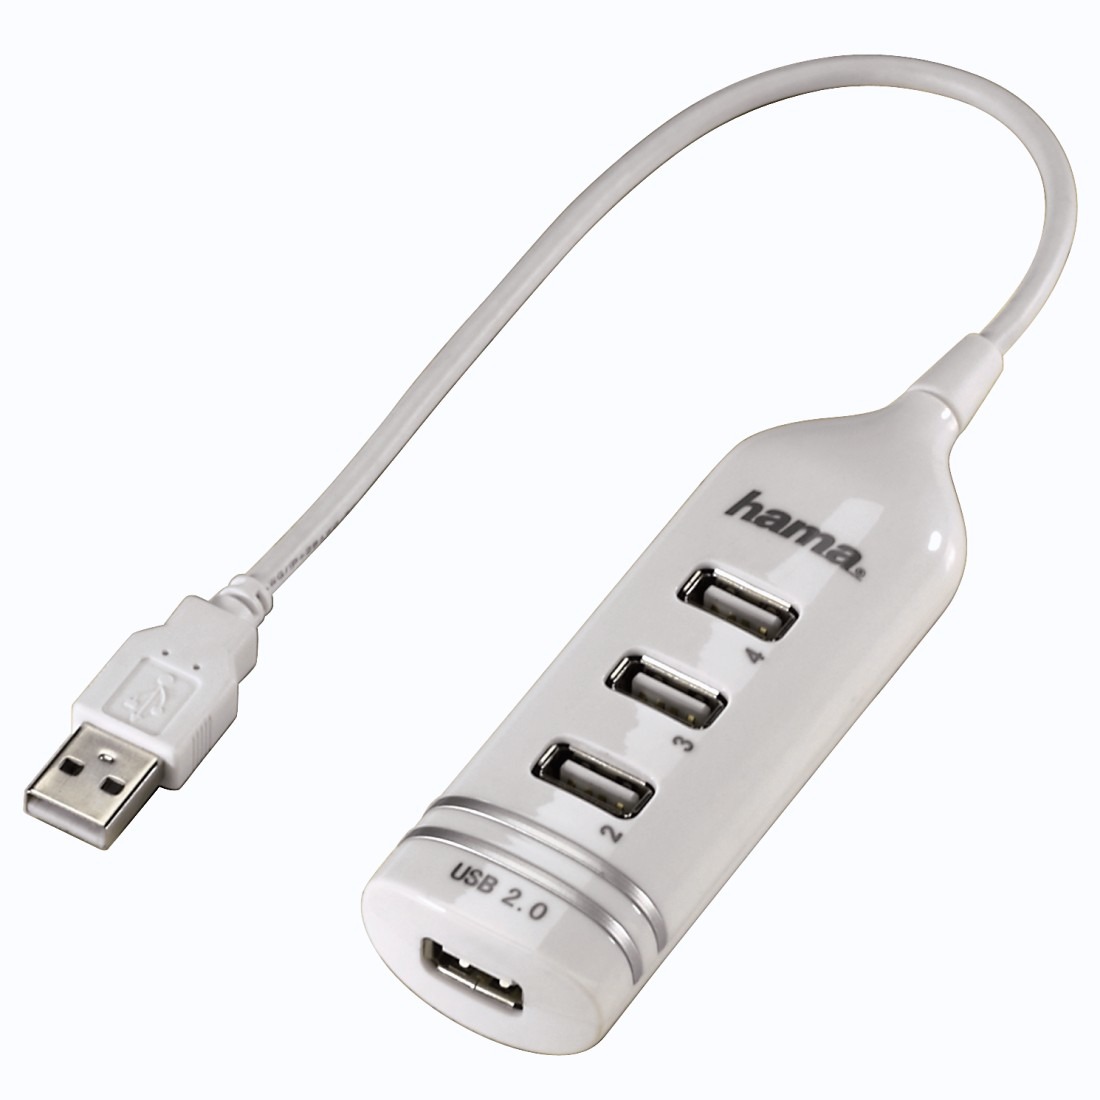 Hama USB 2.0 HUB 1:4 BUS-POWERED USB Hub Wit